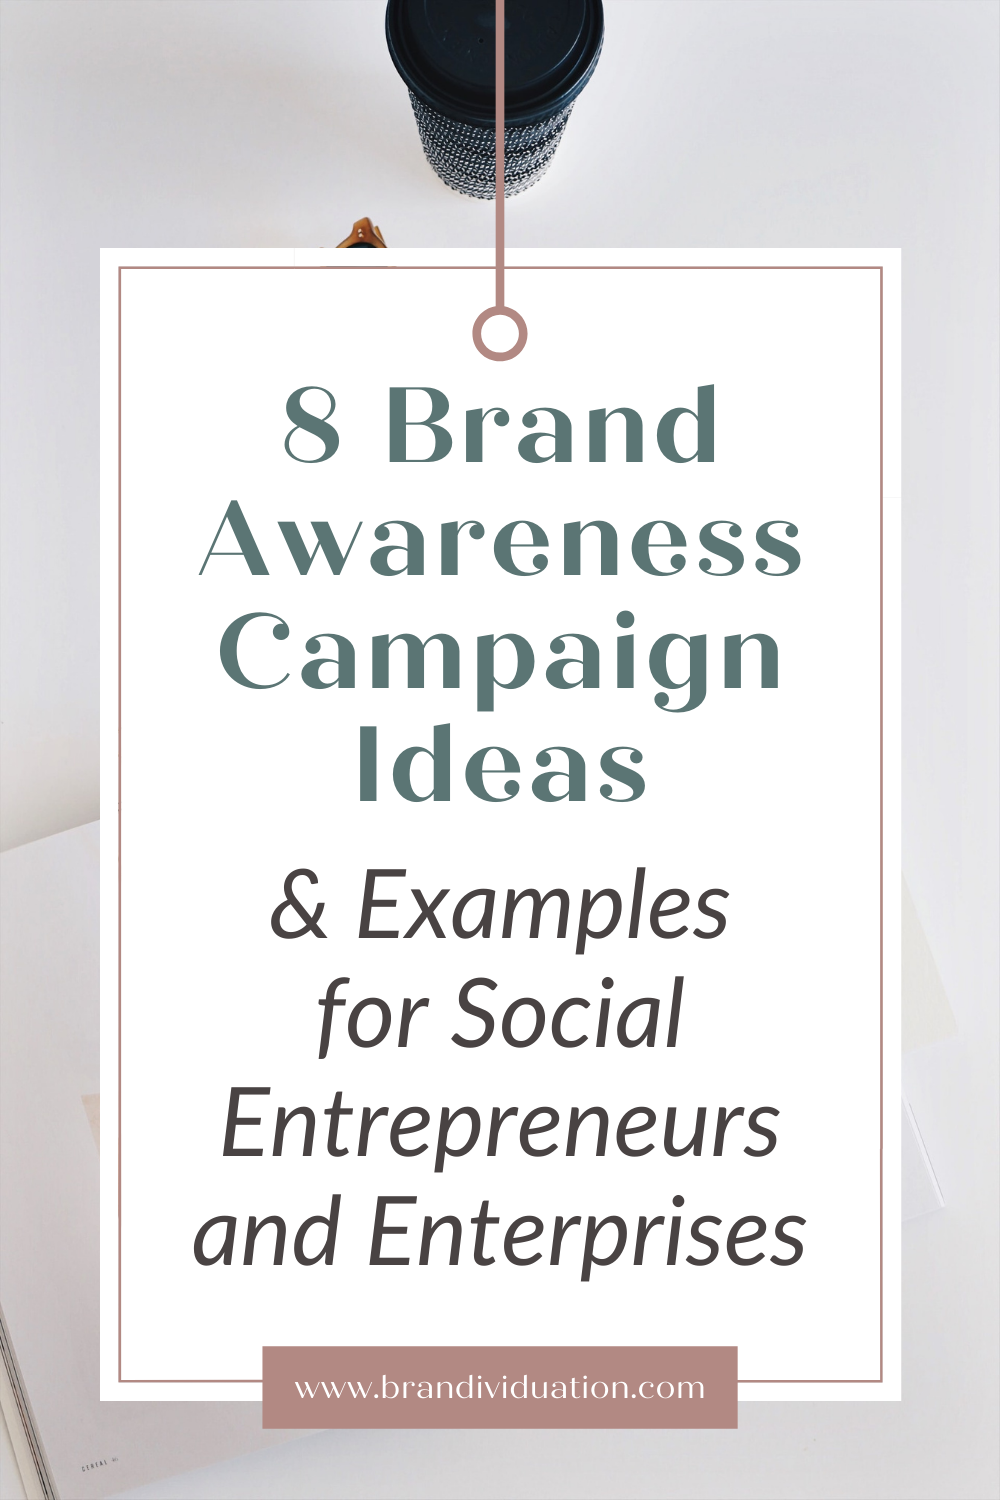 8 Brand Awareness Campaign Ideas & Examples for Social Entrepreneurs and Enterprises